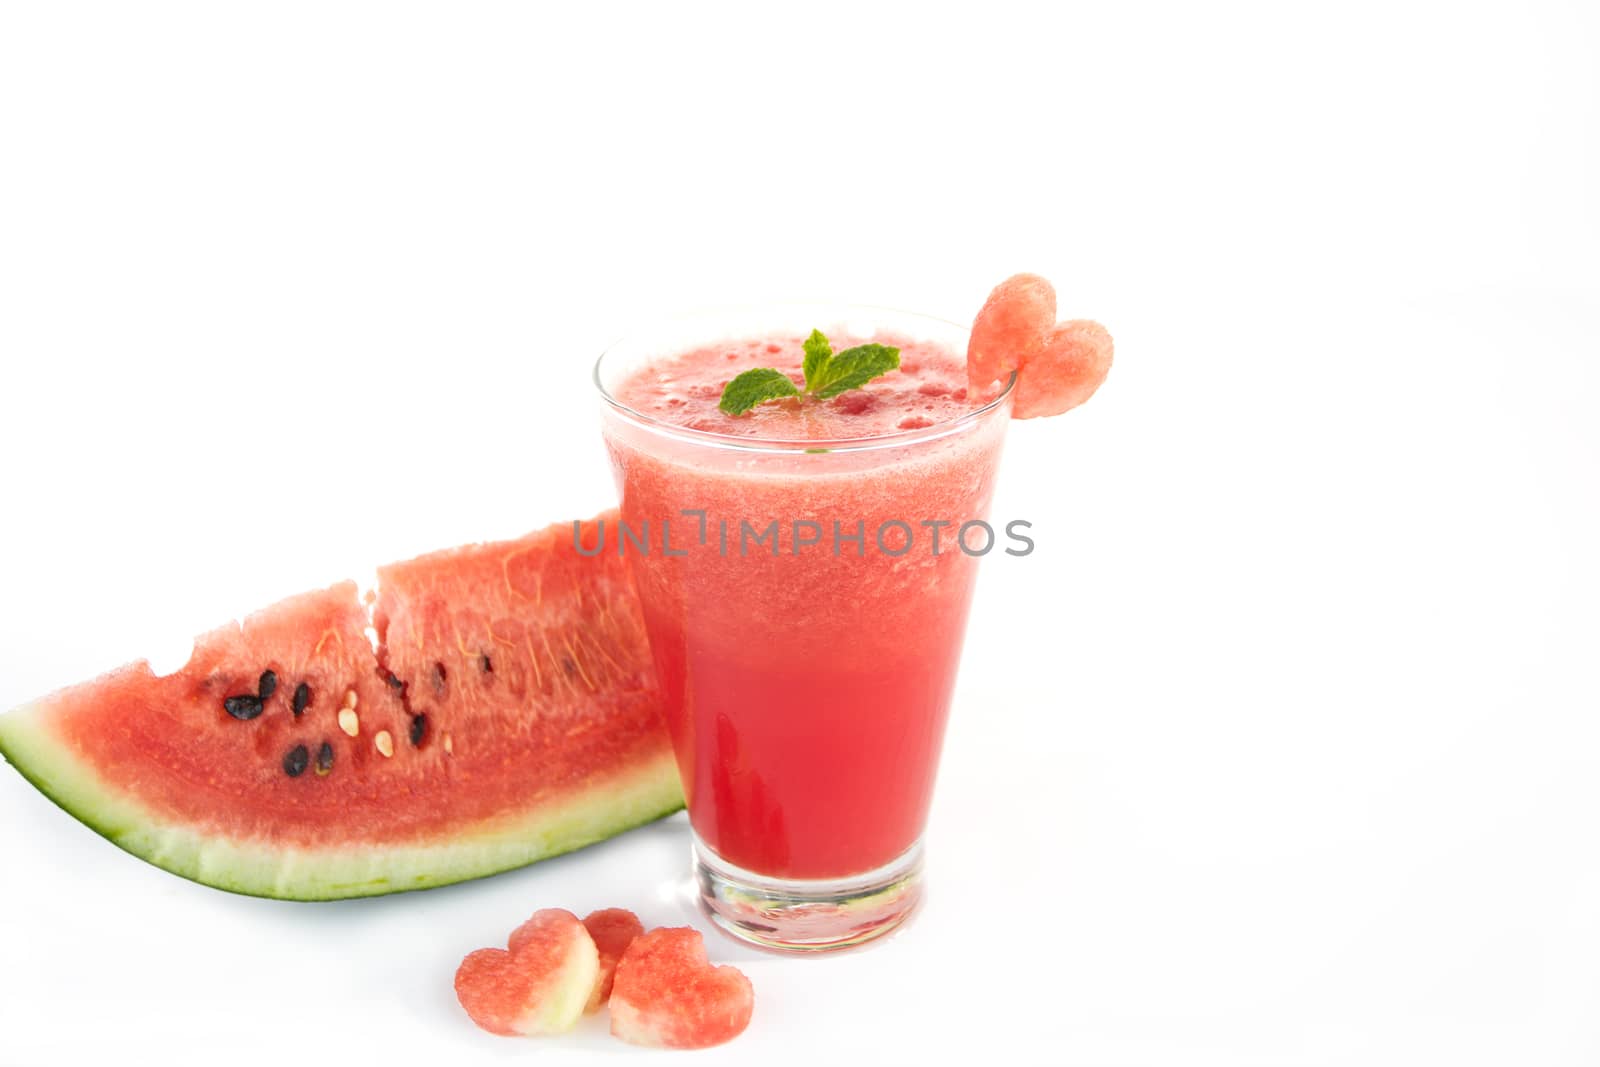 Water melon juice by wyoosumran